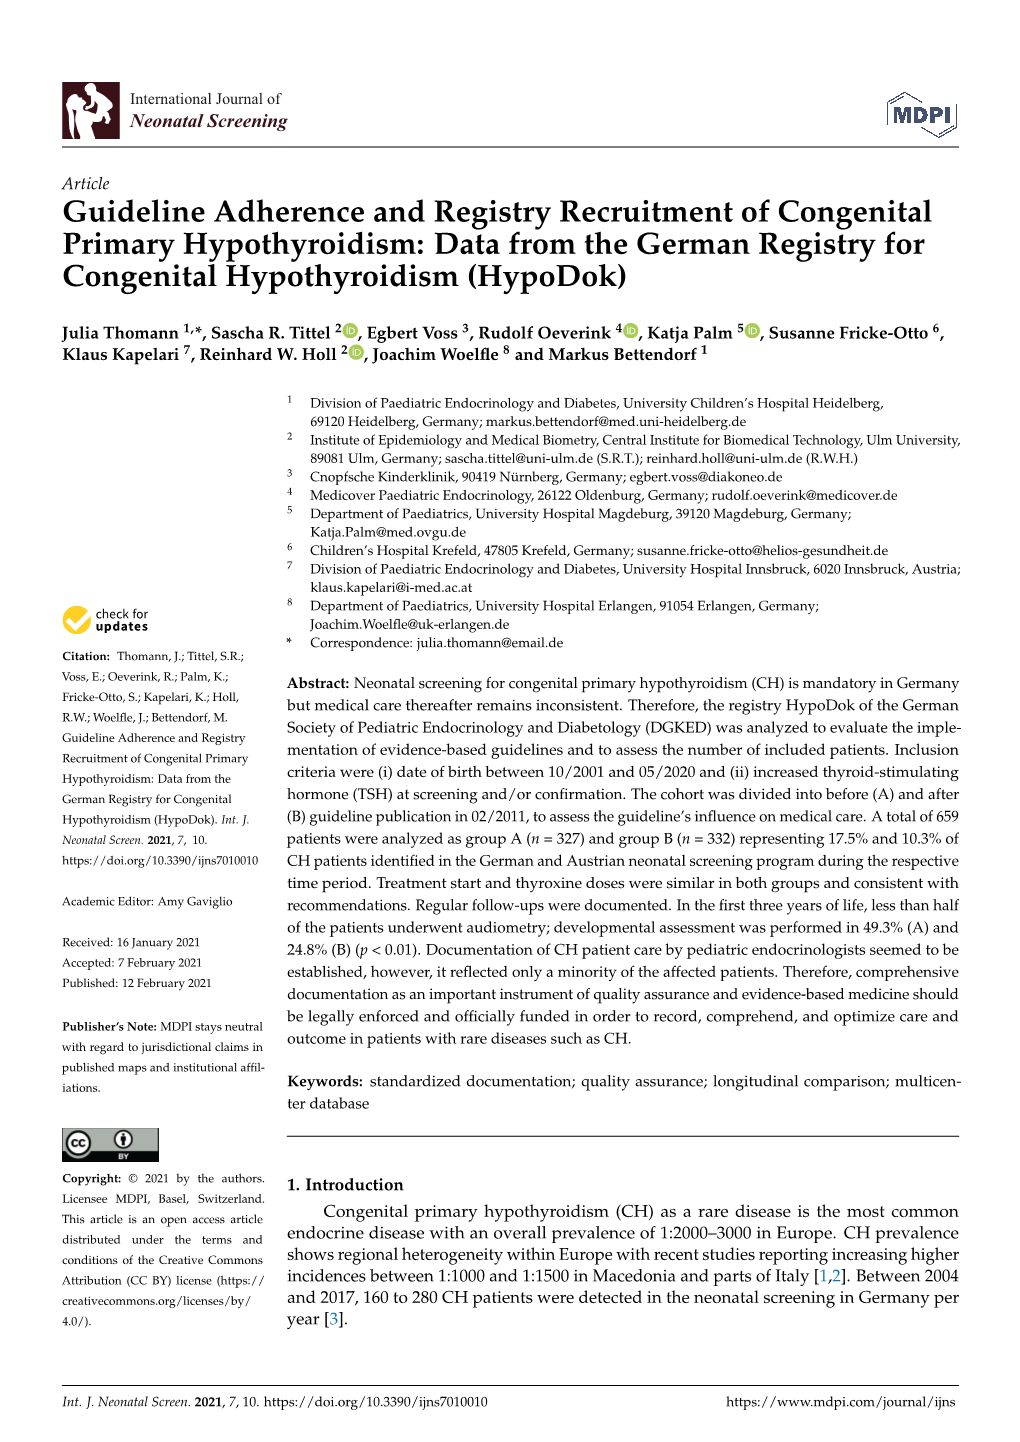 Data from the German Registry for Congenital Hypothyroidism (Hypodok)